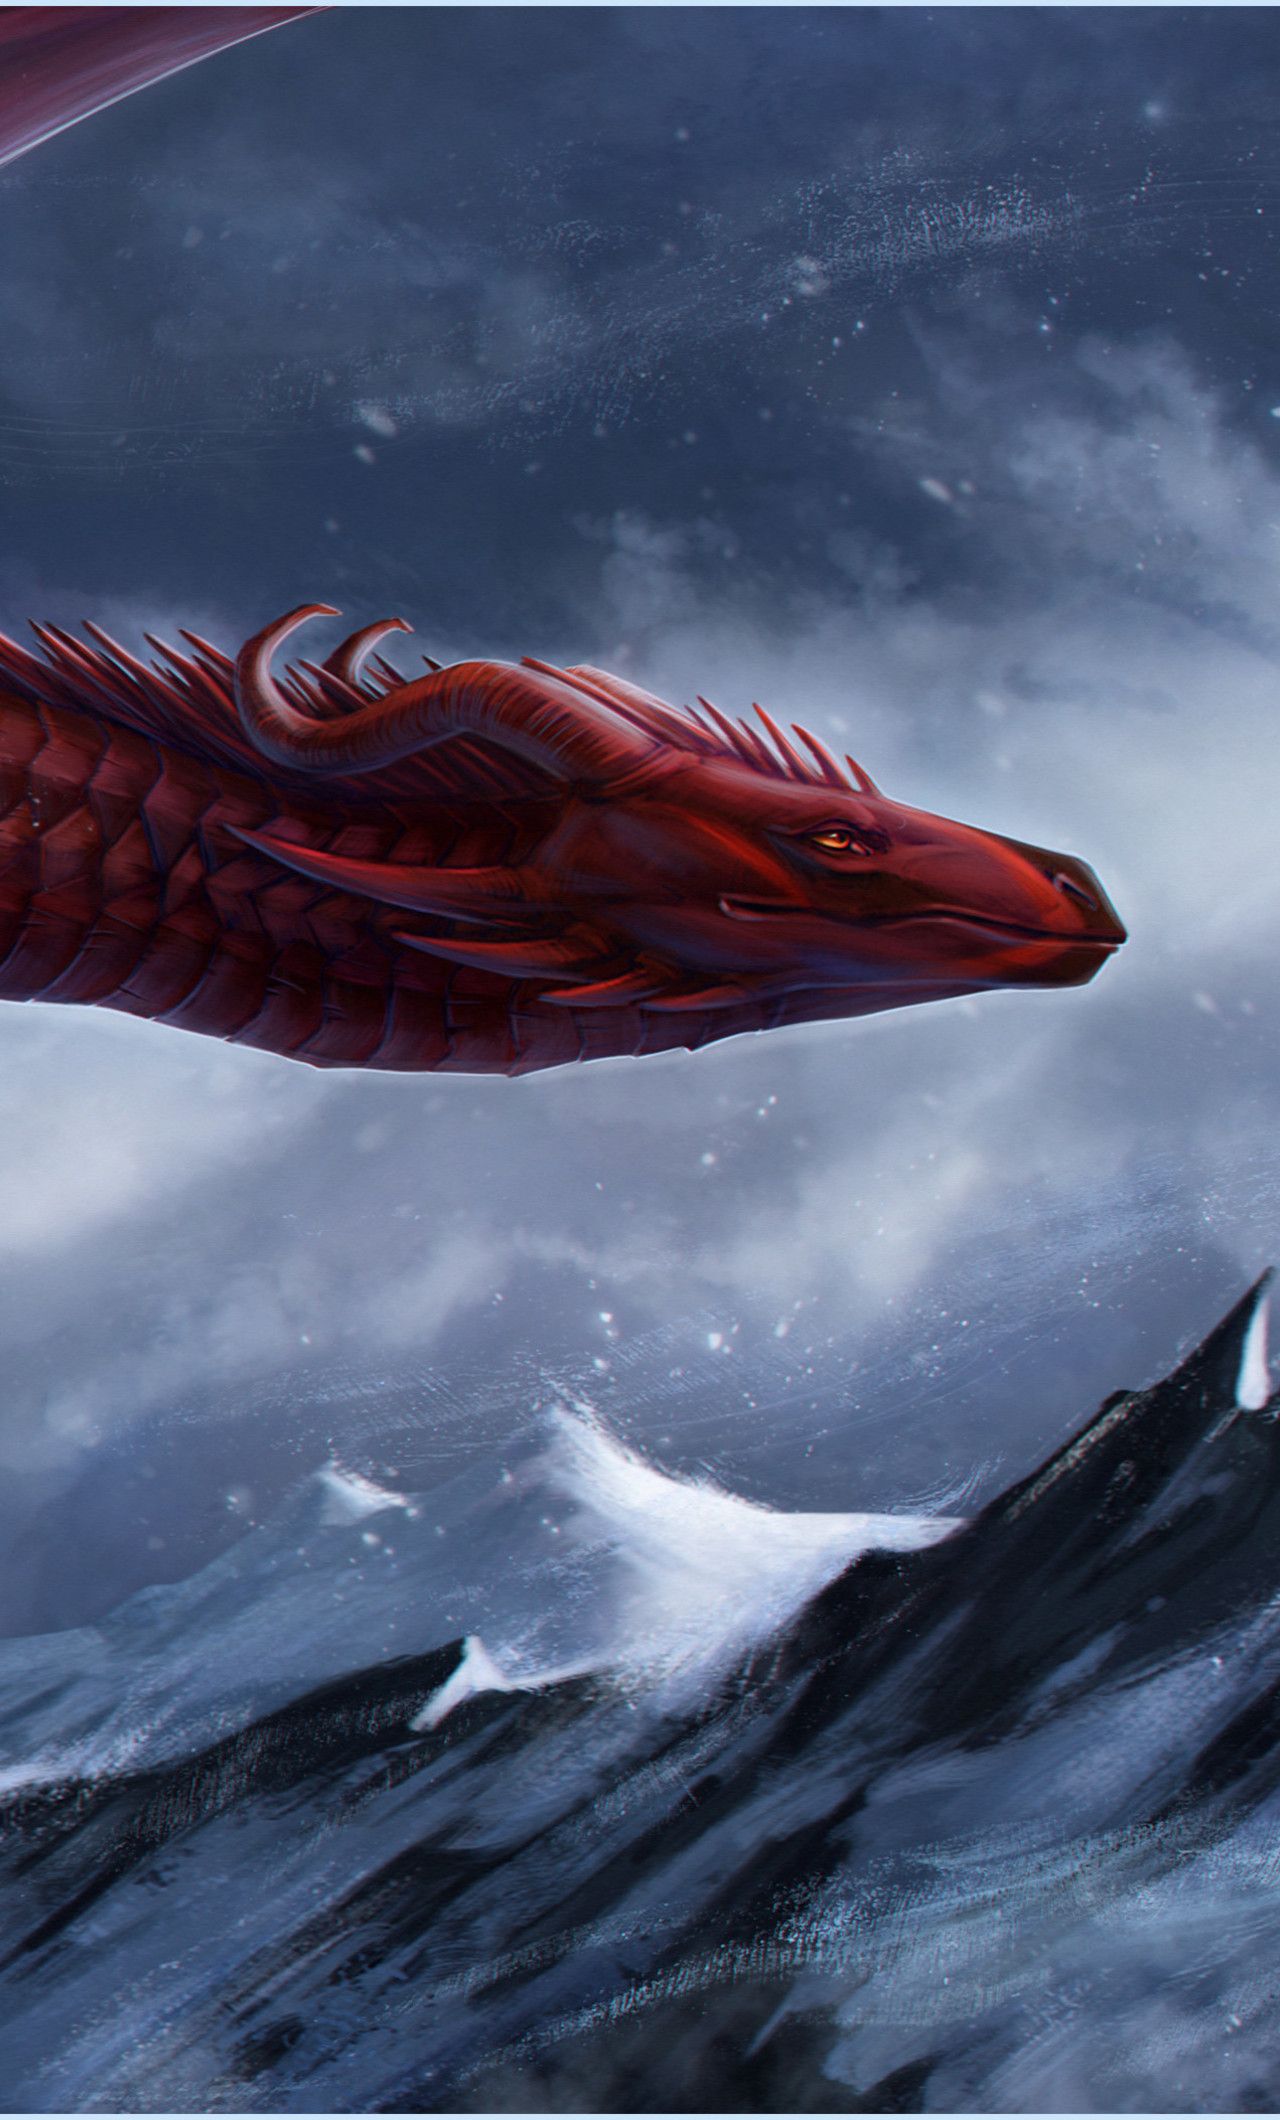 Big Red Dragon iPhone HD 4k Wallpaper, Image